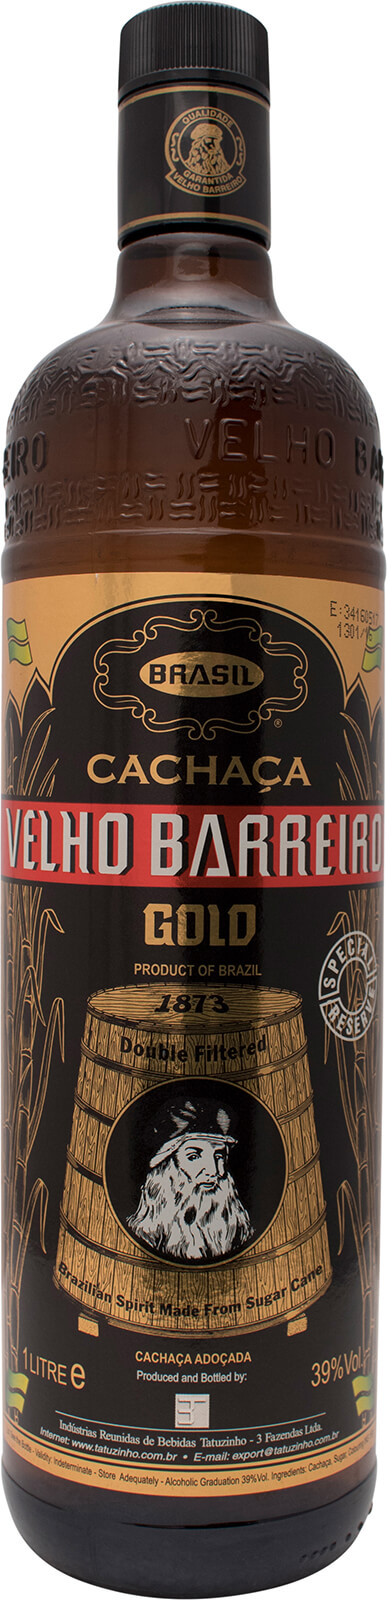 Velho Barreiro Cachaca Gold 39% 1 Jahre) (3 Liter